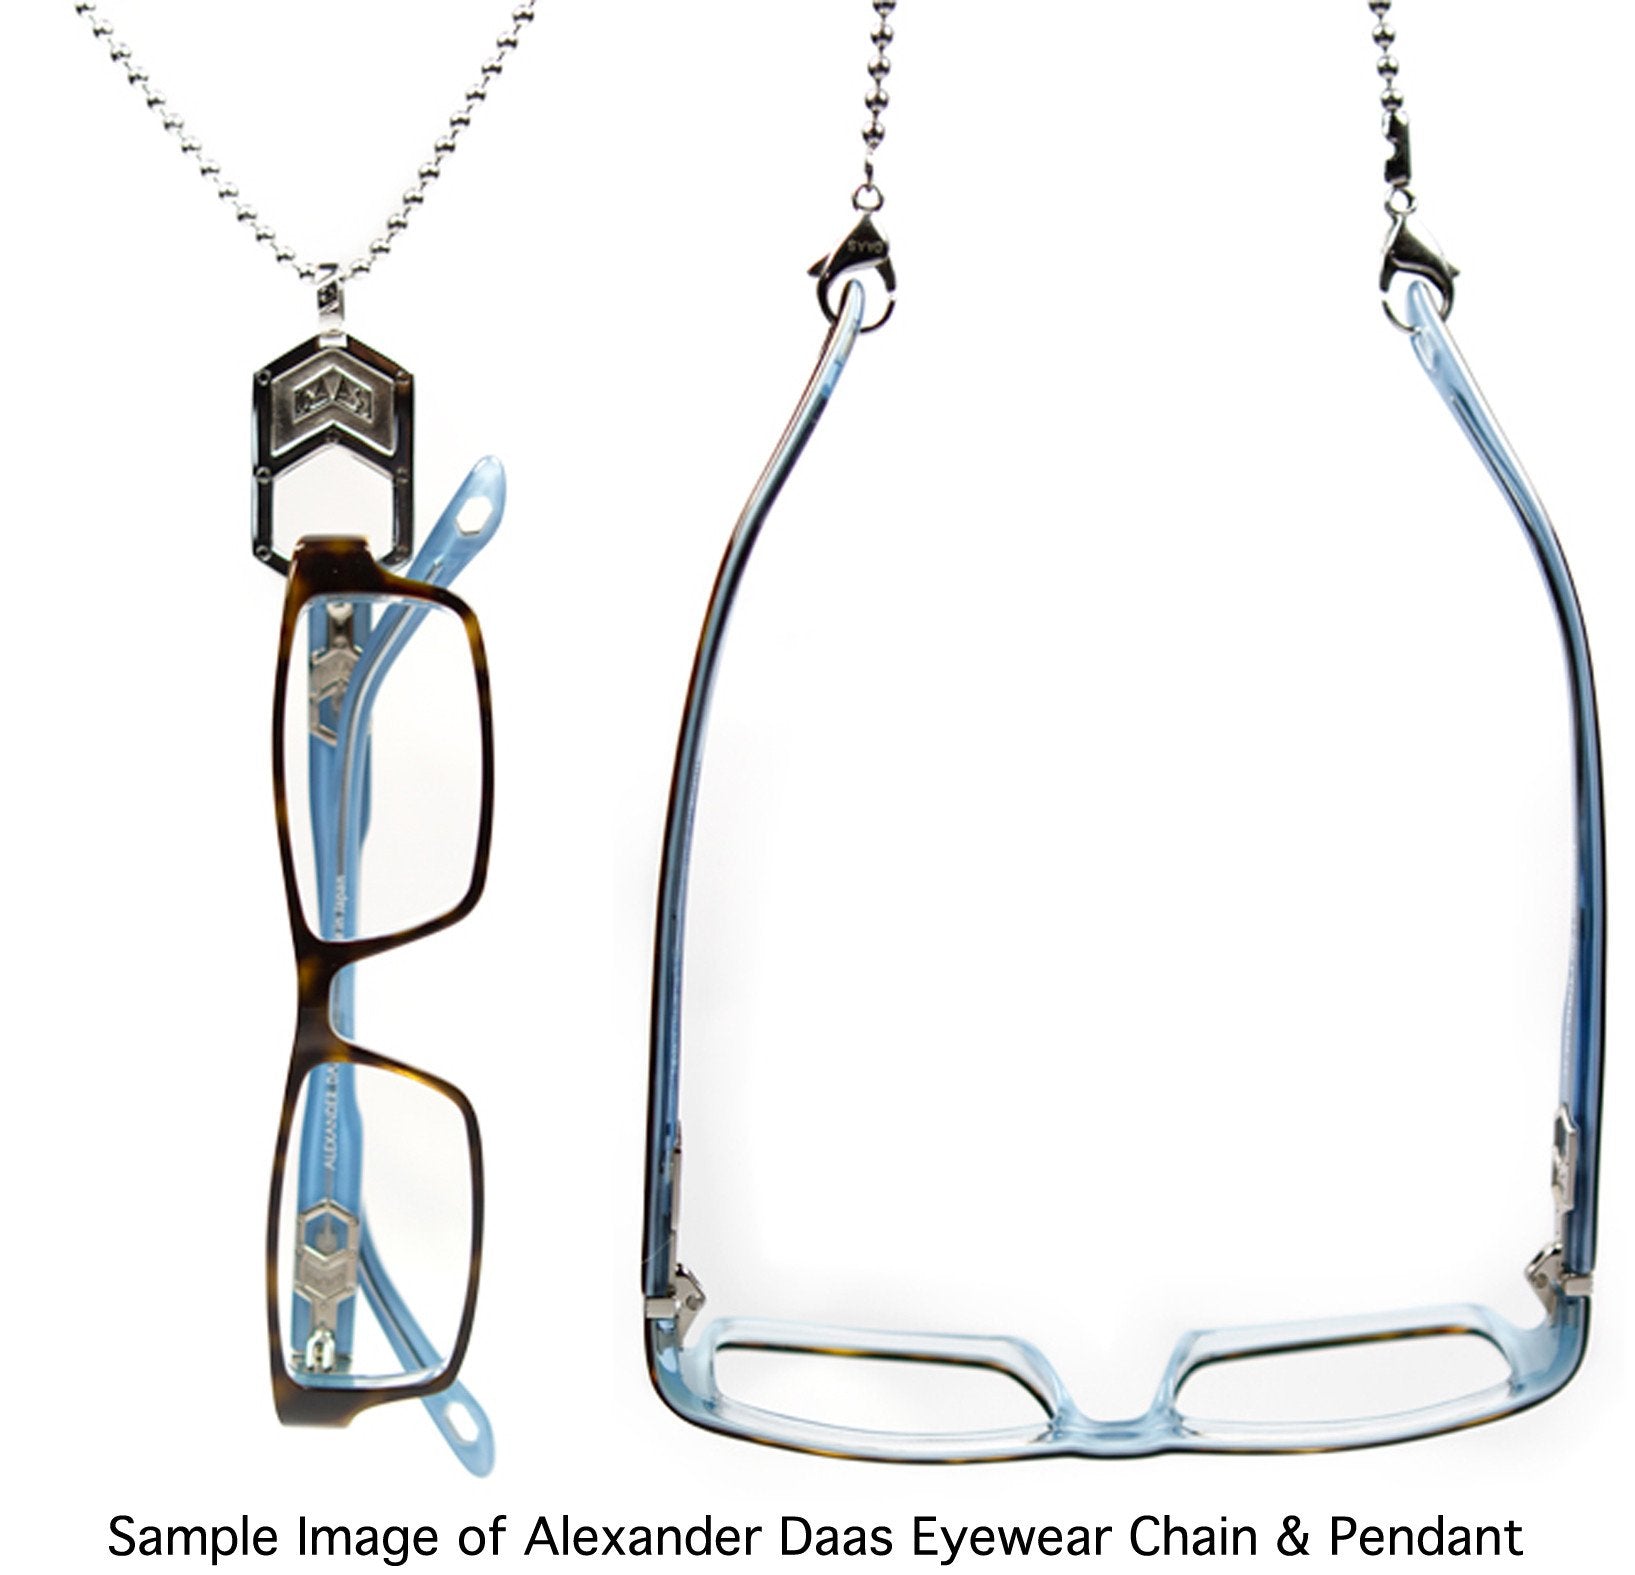 Alexander Daas - Portofino Sunglasses - Sample Image of Eyewear Chain & Pendant Accessories